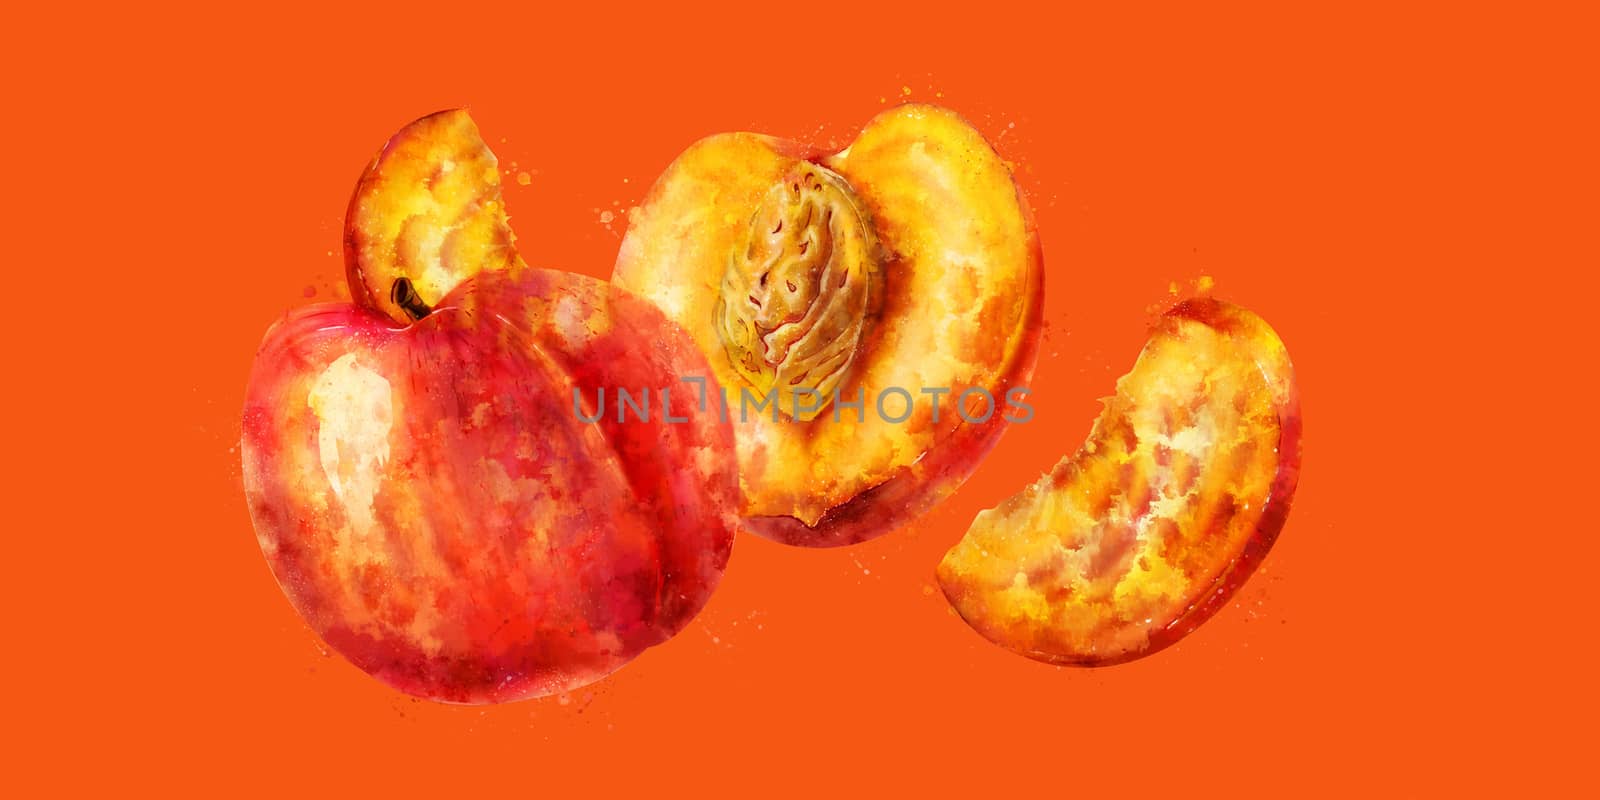 Peach, hand-painted illustration on orange background